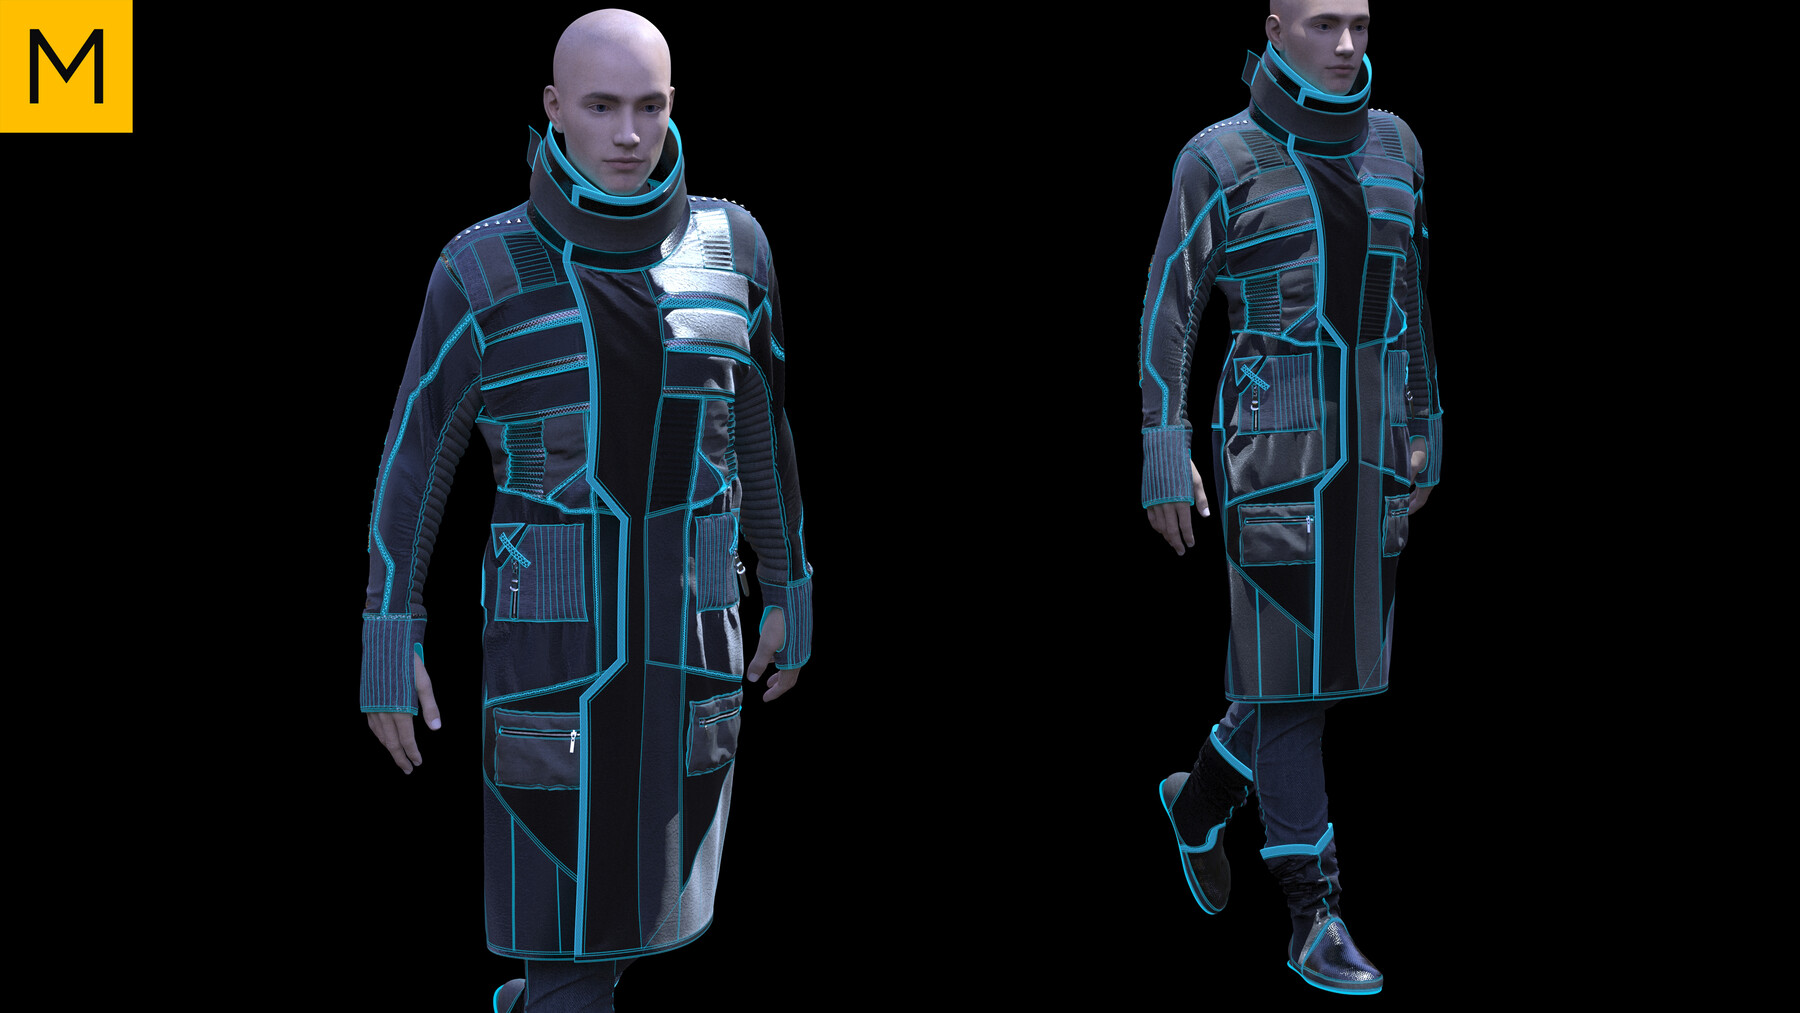 ArtStation - Sci-Fi / Cyberpunk Male Clothing. Avatar genesis 8 Male.  Marvelous Designer, Clo3d project + OBJ/FBX files.(19) | Game Assets